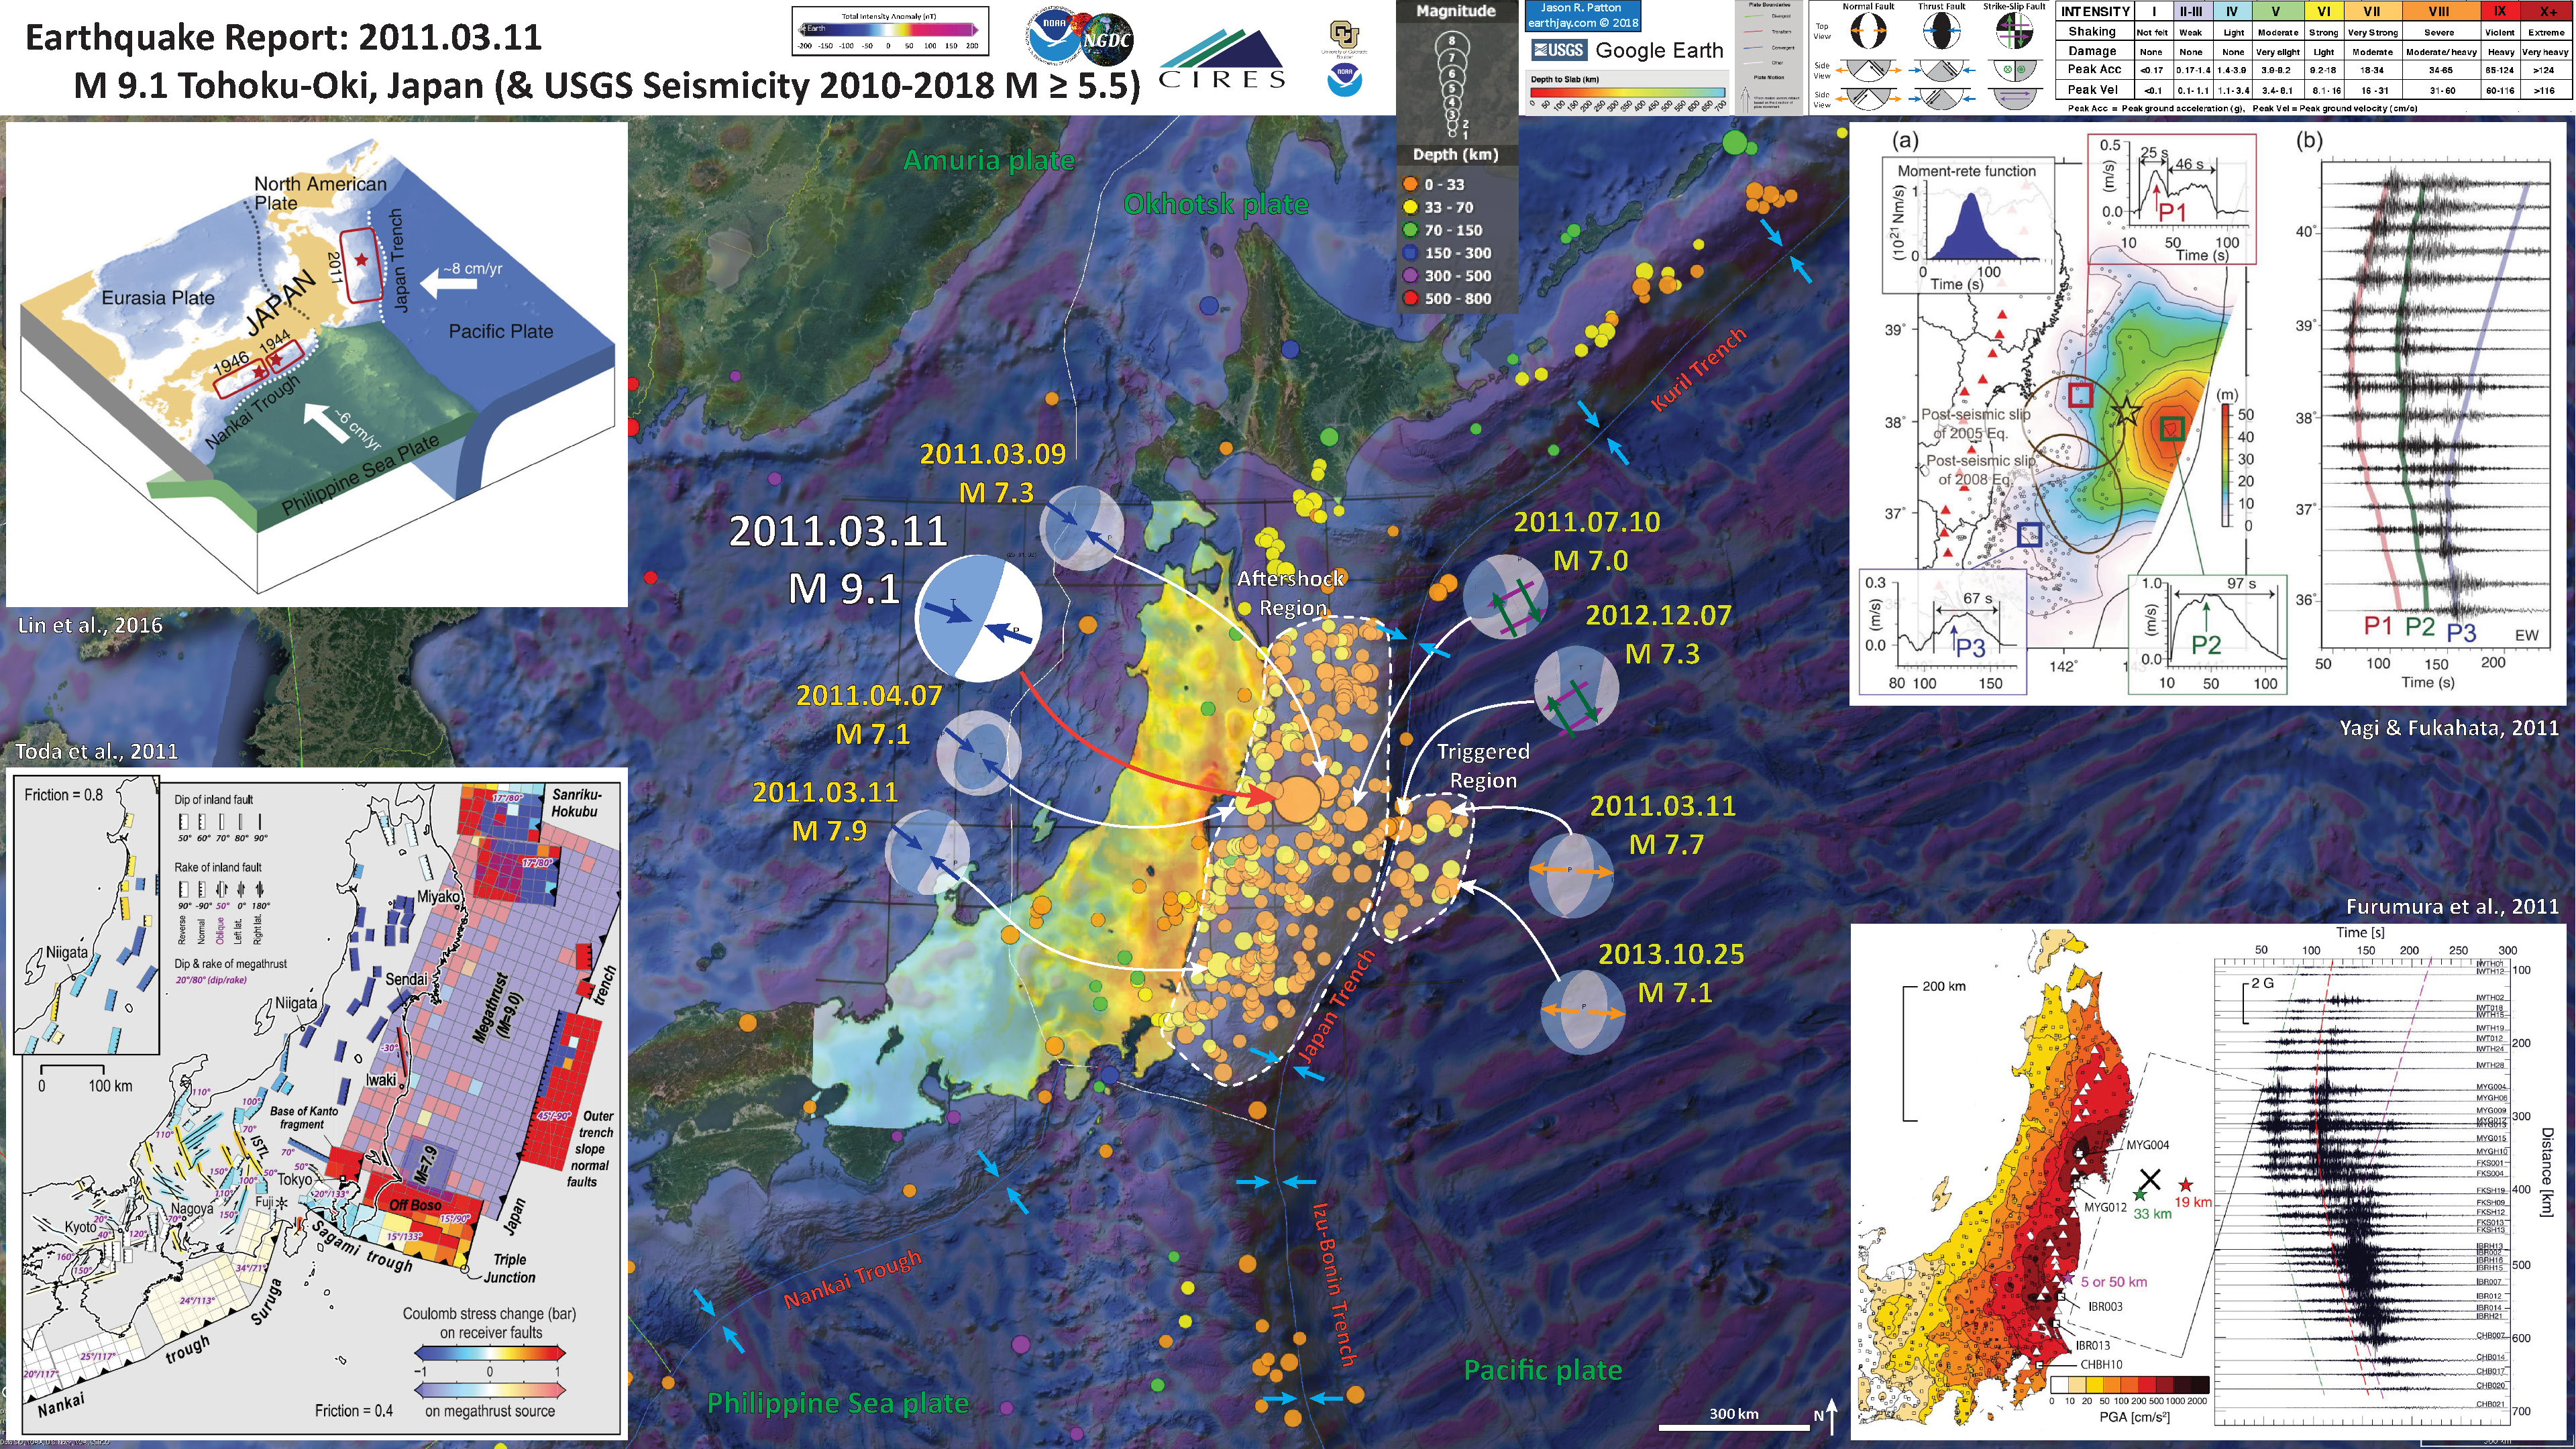 The 11 March 2011 Tōhoku-oki earthquake - Jay Patton online